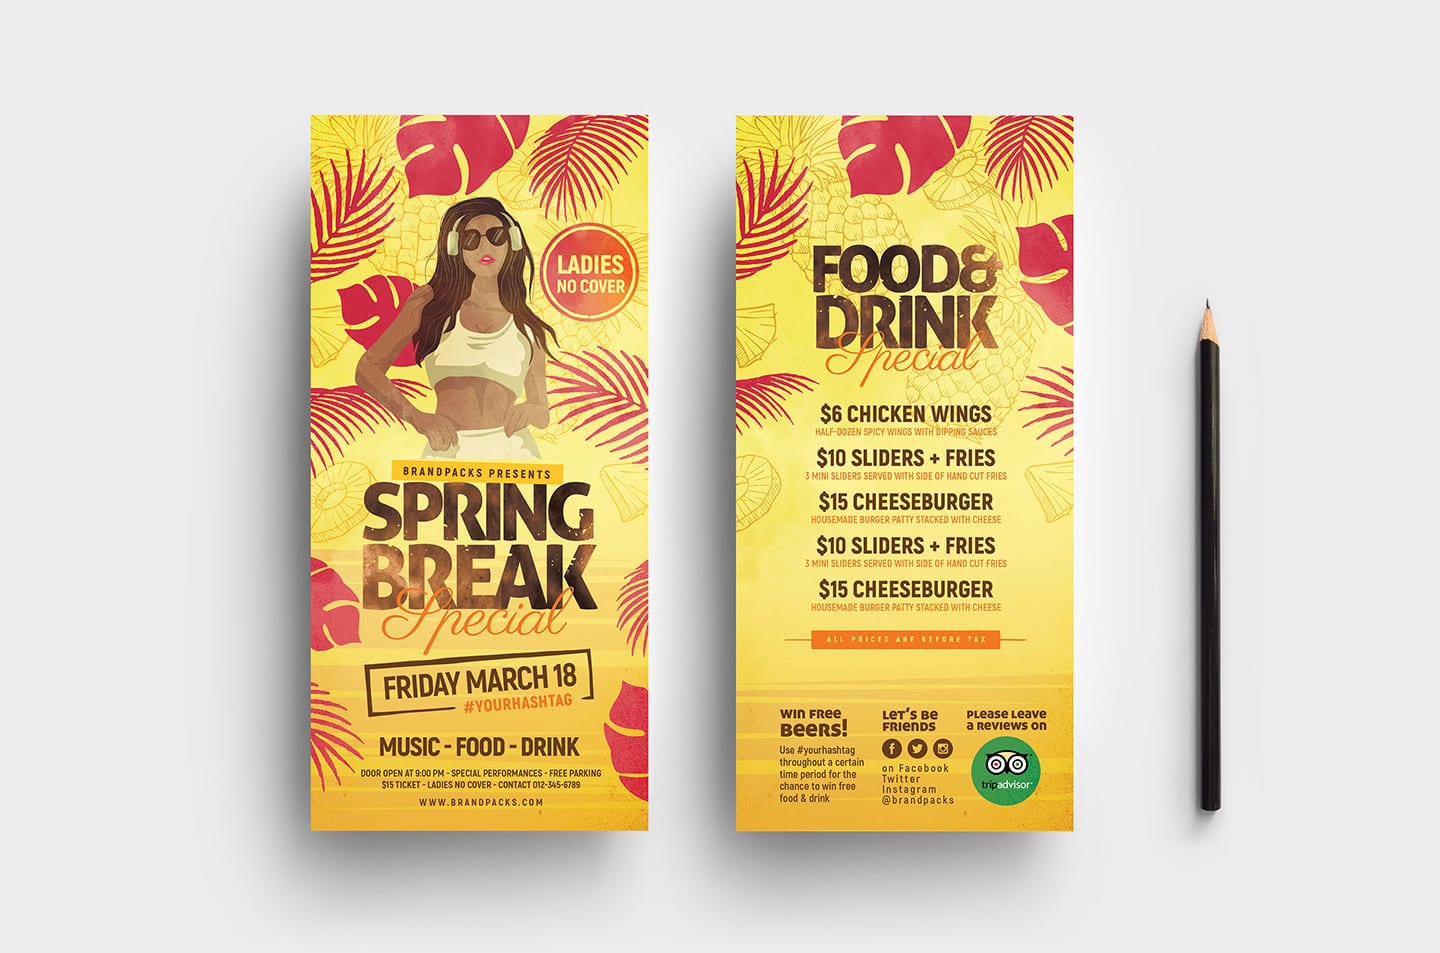 Spring Break DL Card Template